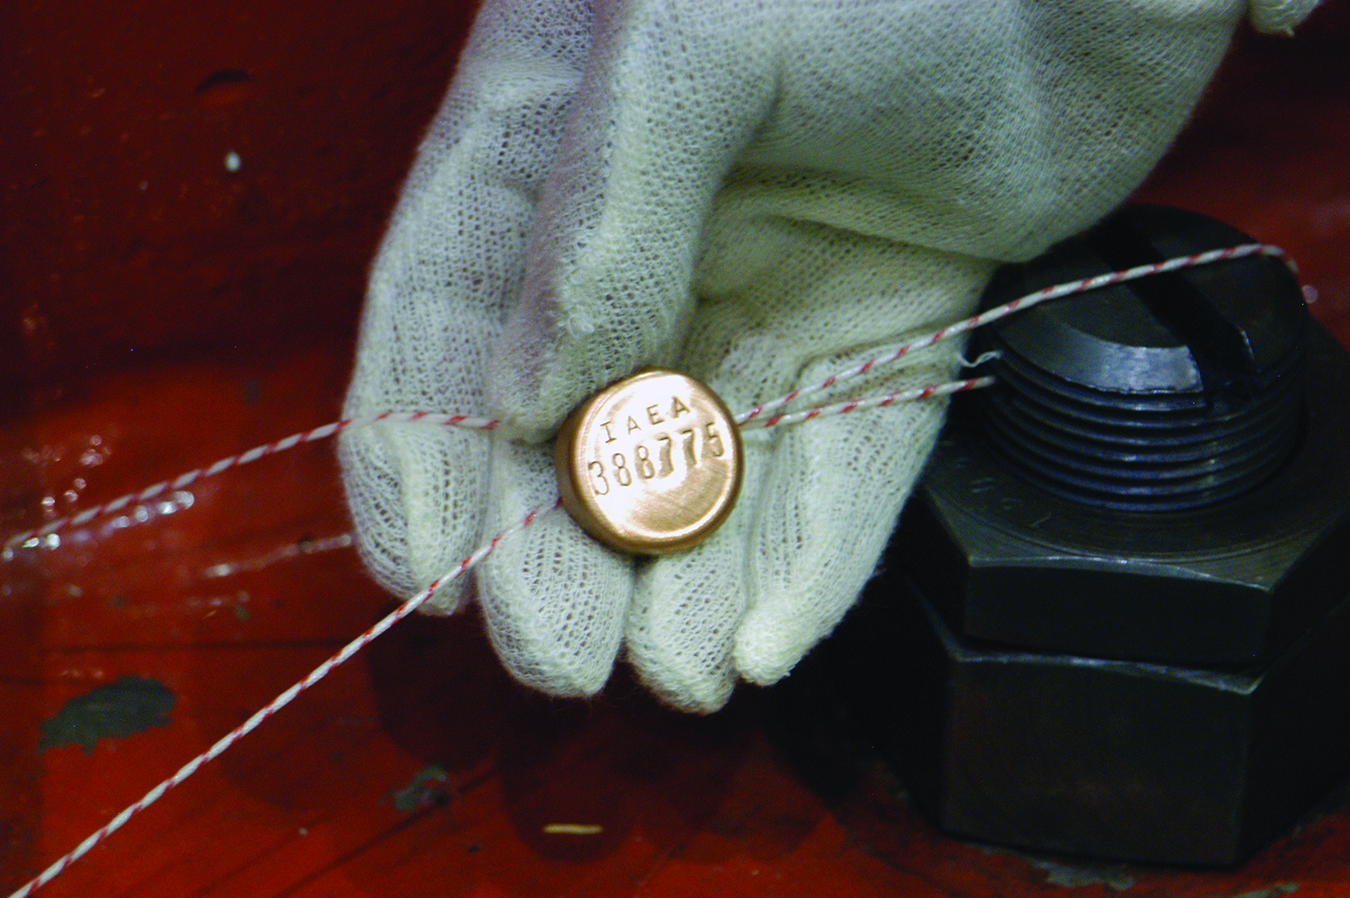 IAEA metal seal. Photo by Dean Calma/IAEA.